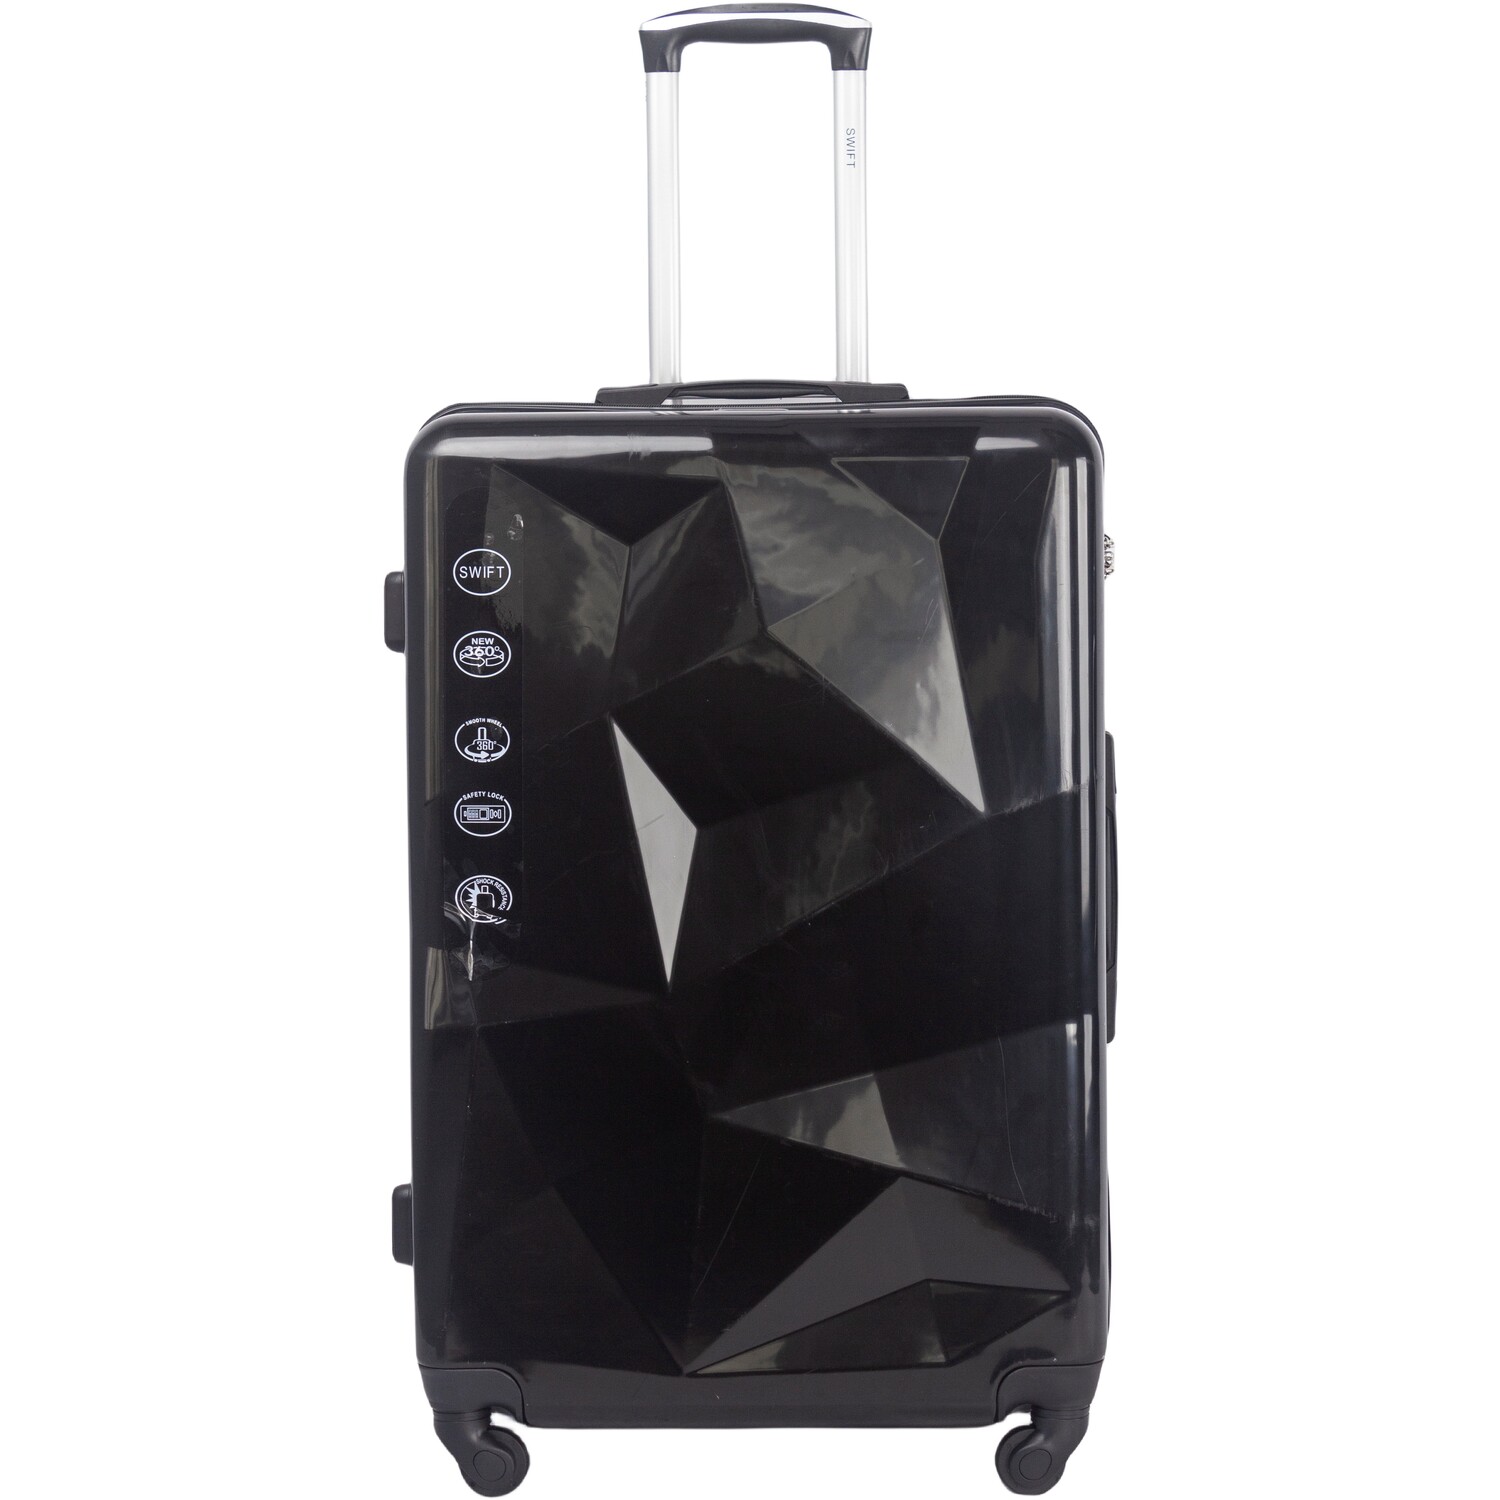 Swift Comet Suitcase - Black / Cabin Case Image 1